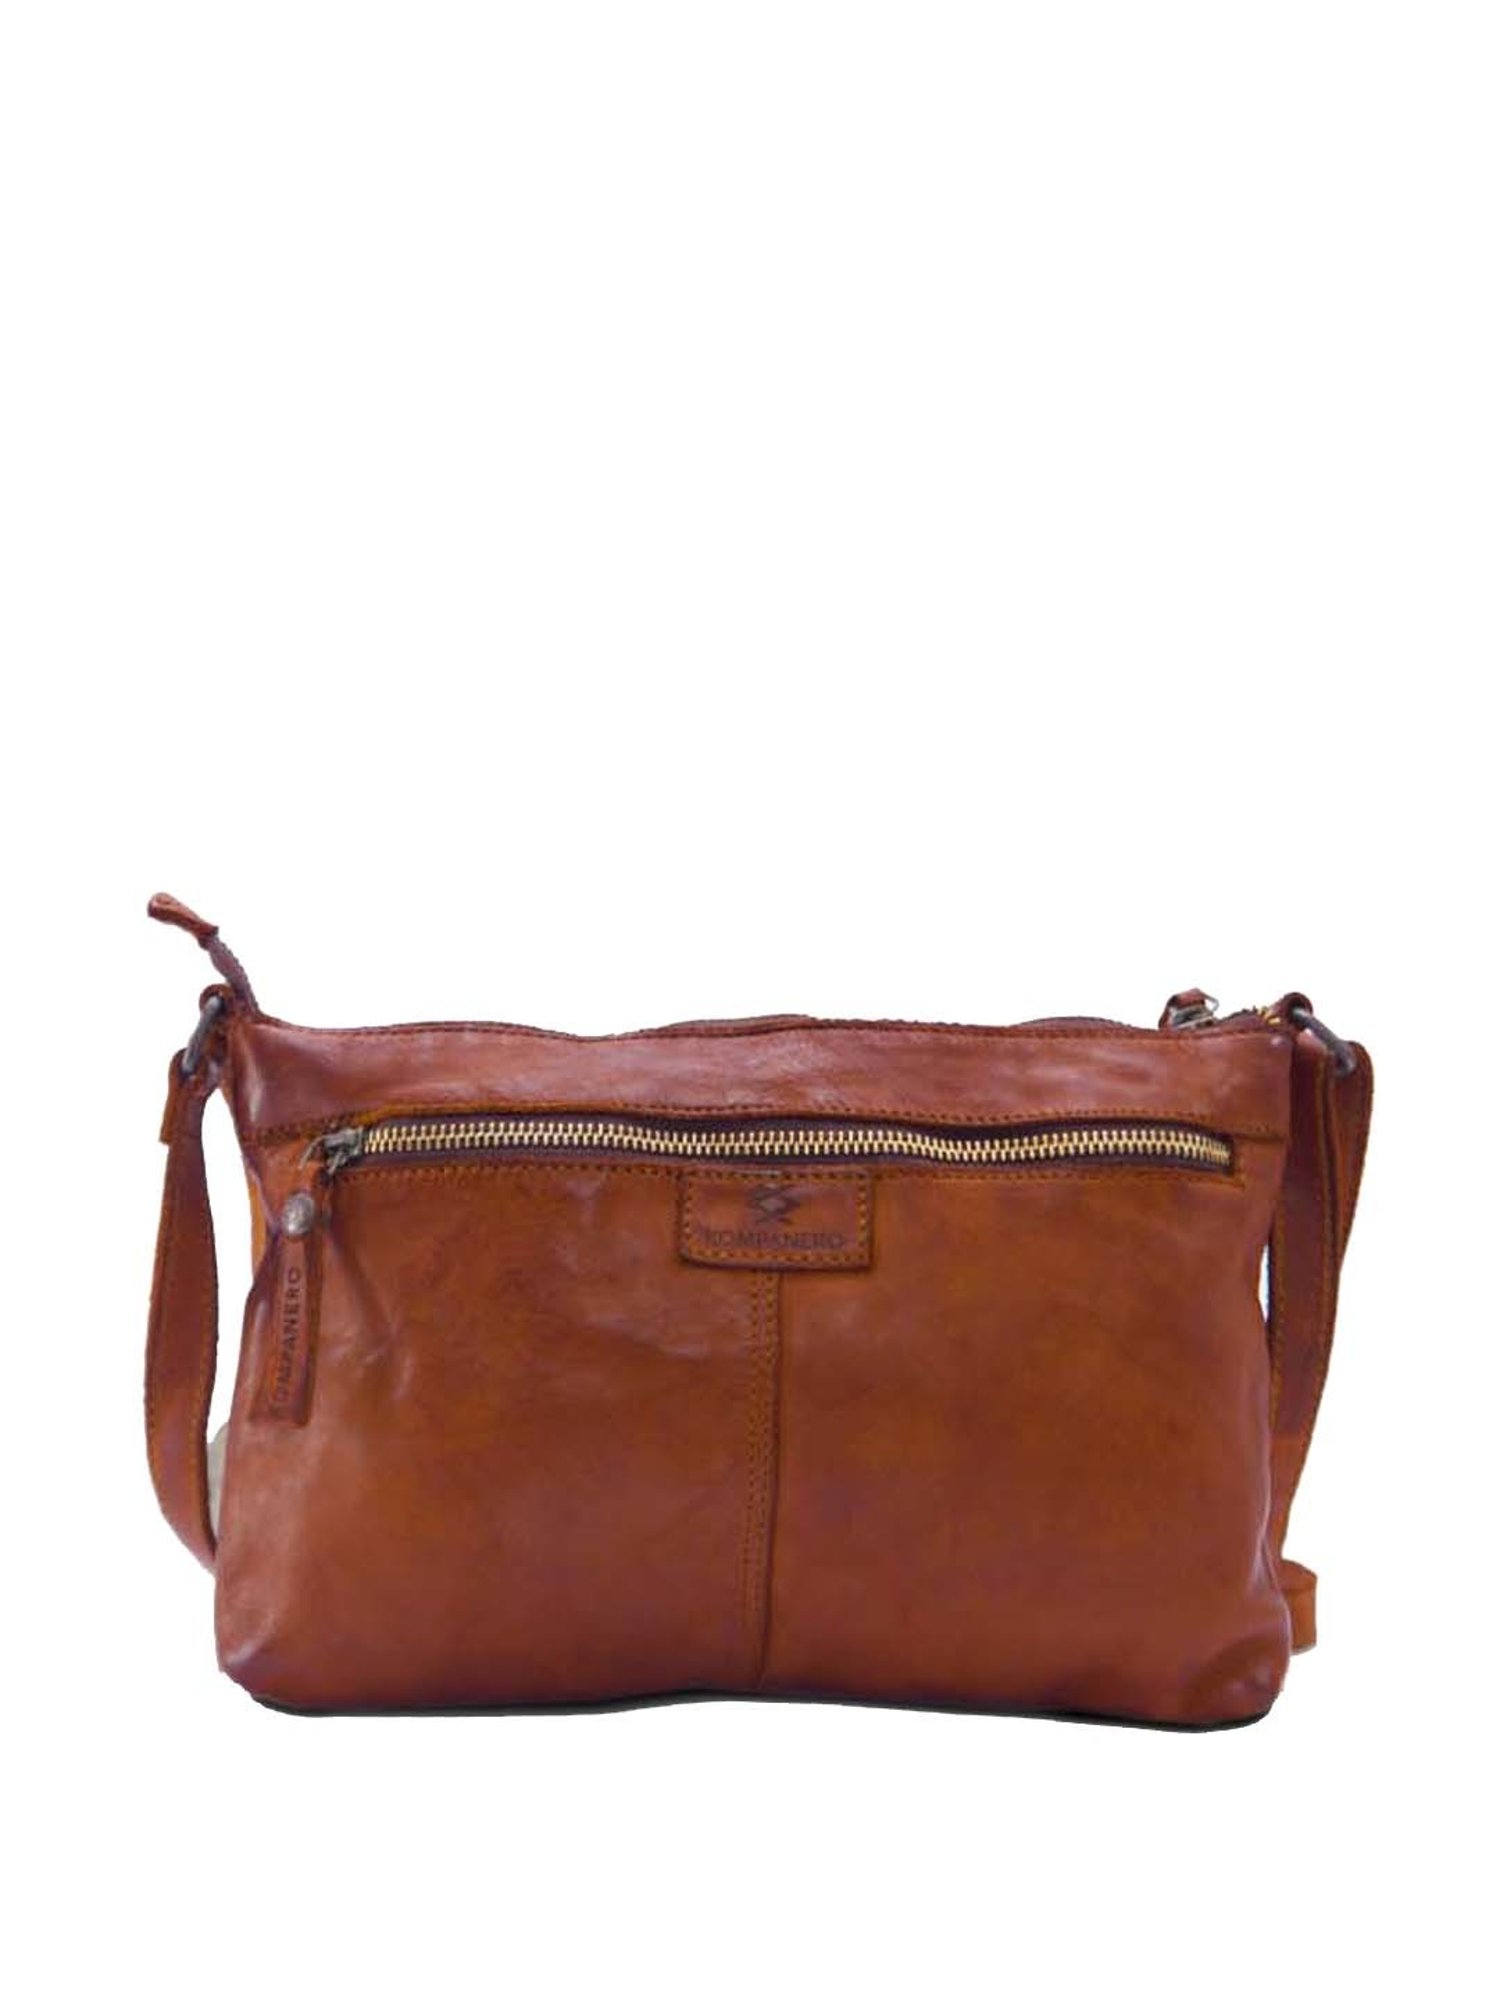 Kompanero Brown Sling Bag Rosie-The Sling Brown - Price in India